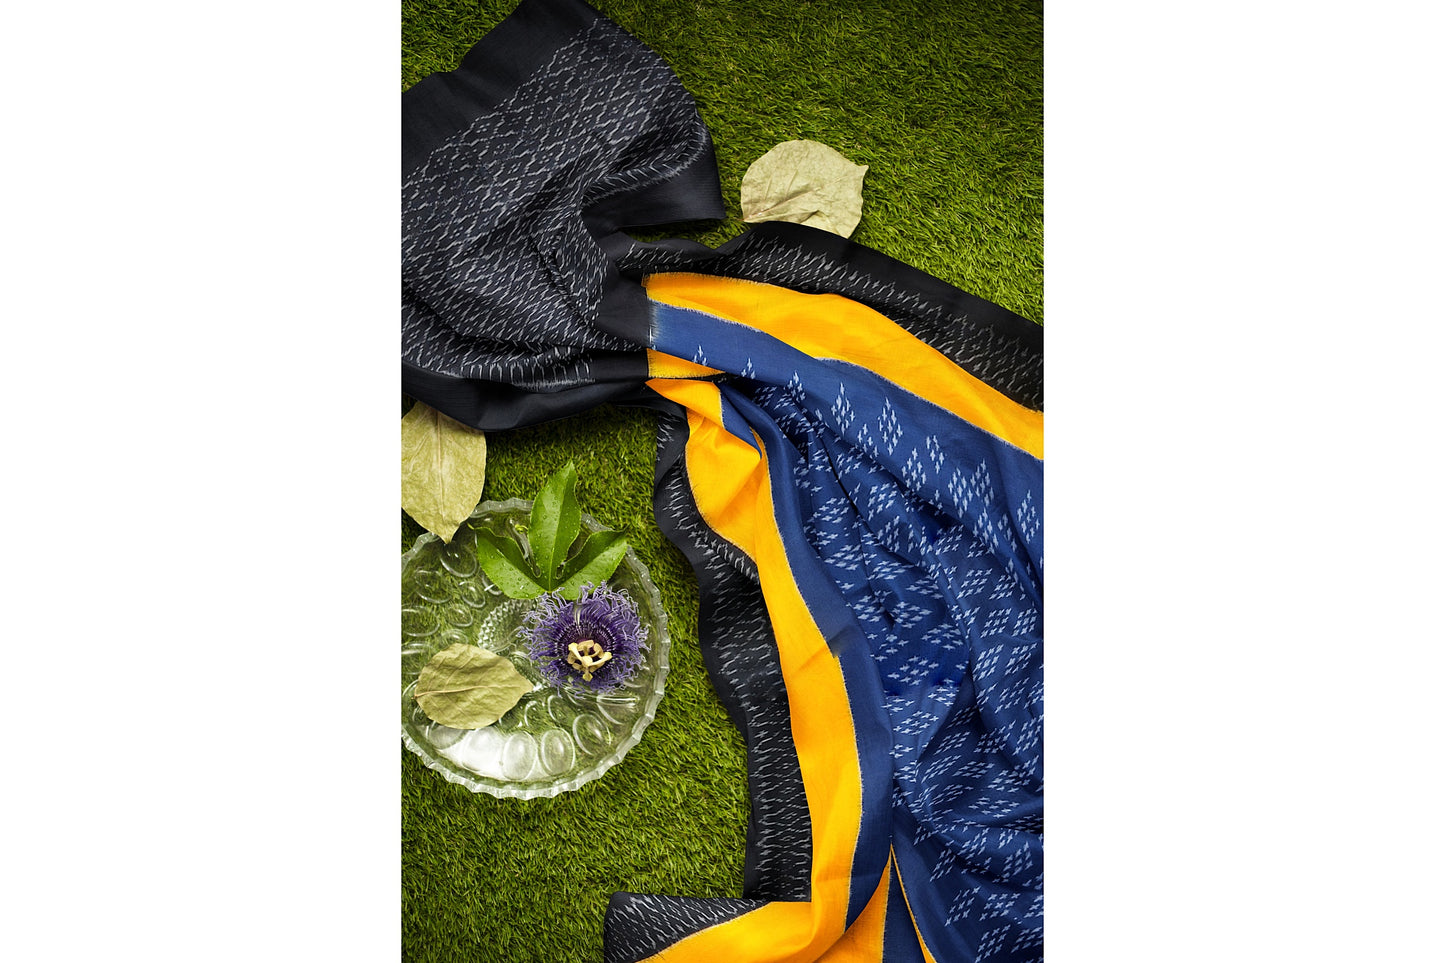 Ikat Mercerised Cotton Saree - Blue body with Yellow and black border